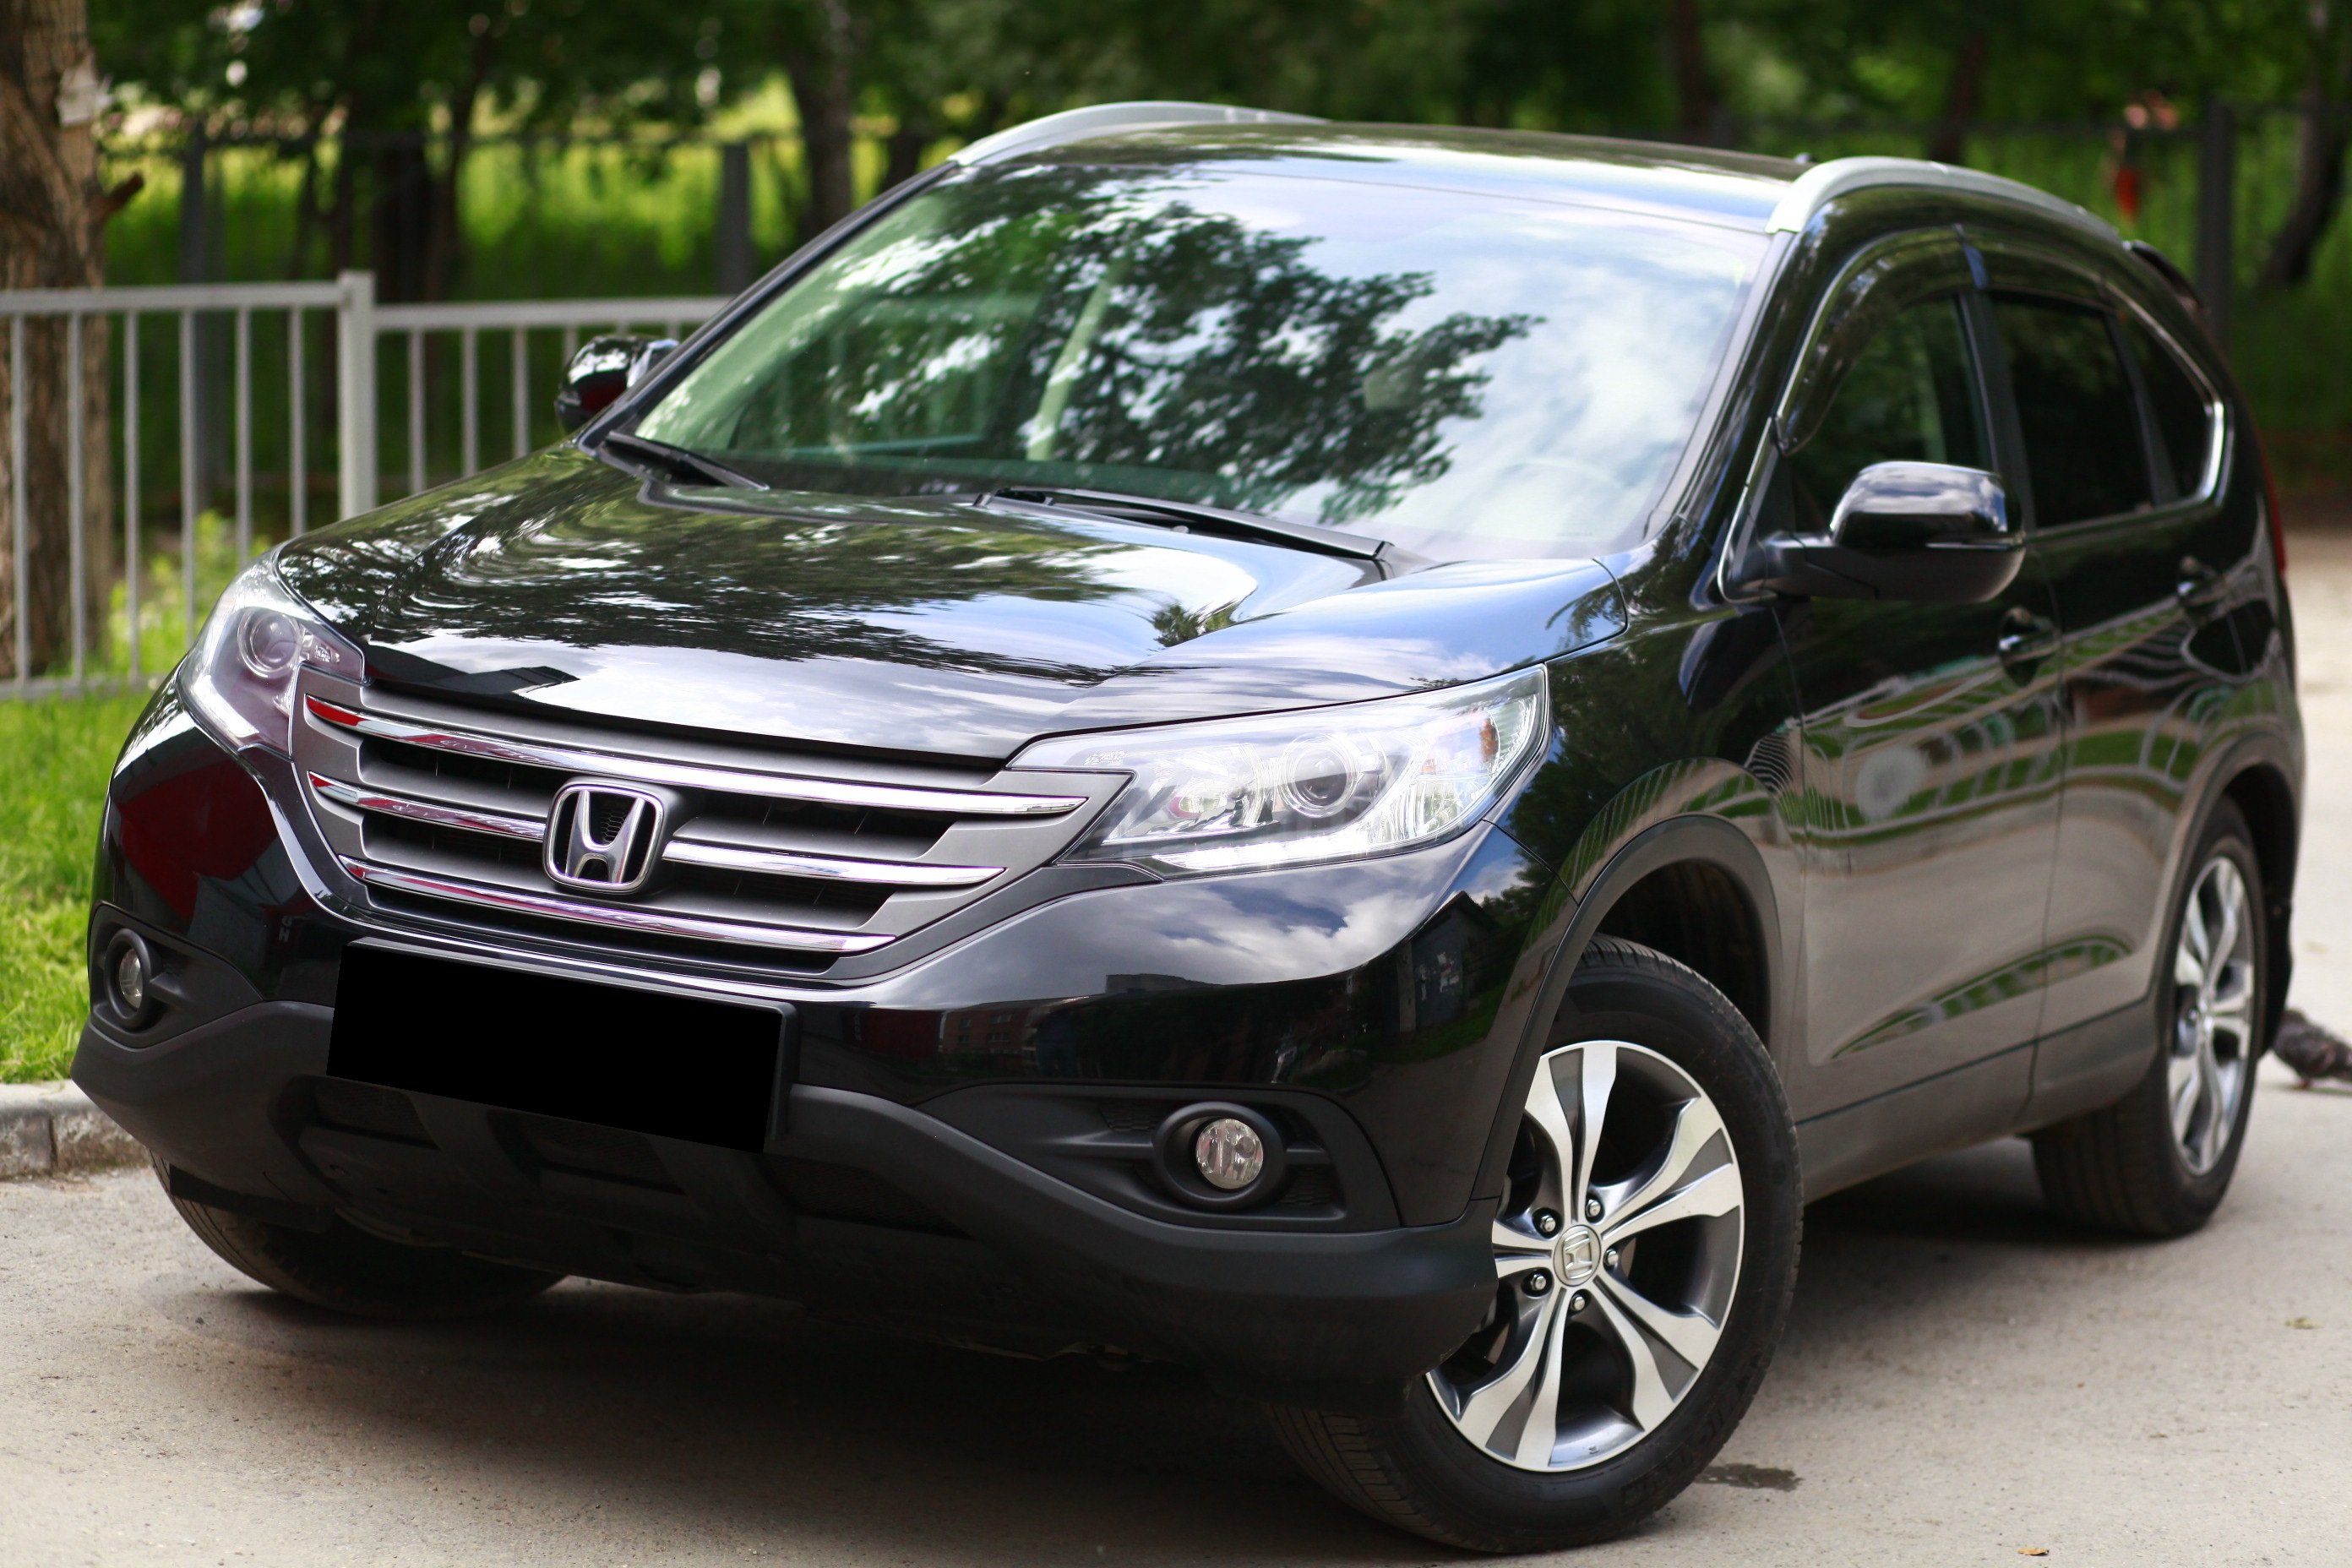 Honda CR-V 2013. Honda CRV 2013 черная. Honda CRV 2013 2.4. Honda CRV 4 2013. Срв 2012 купить